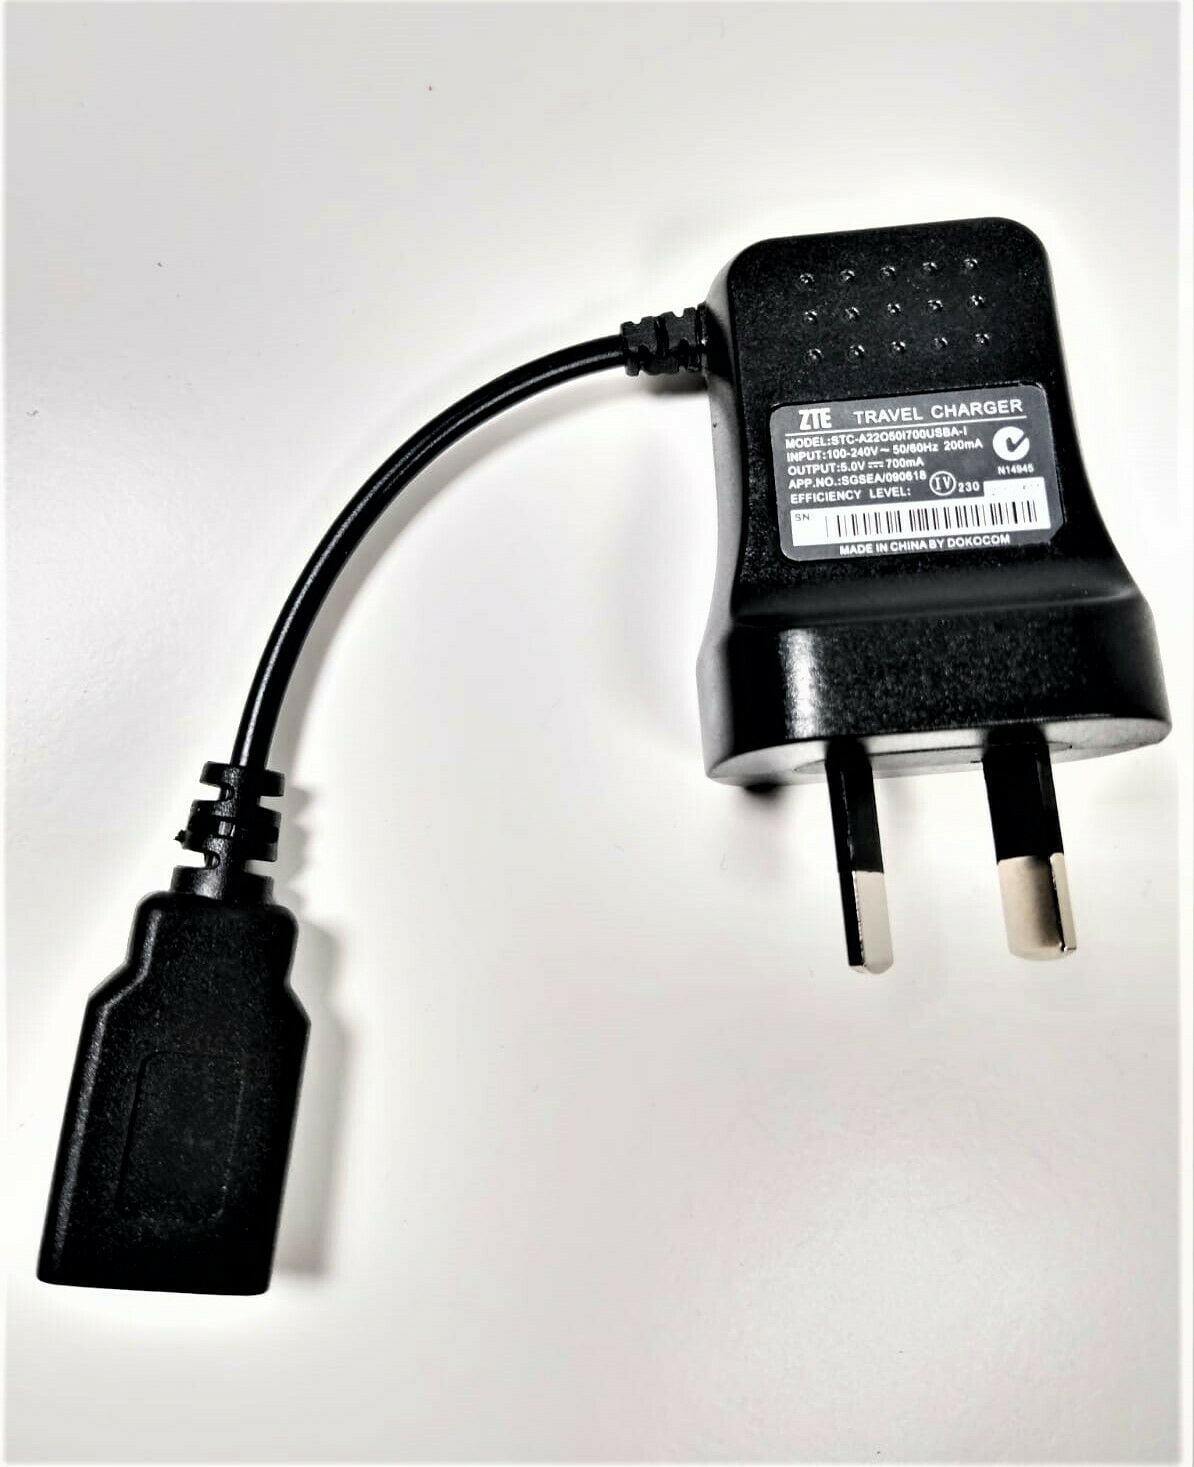 ZTE TRAVEL CHARGER STC-A22050I700M5-B 5V 700mA UK PLUG MICRO USB 